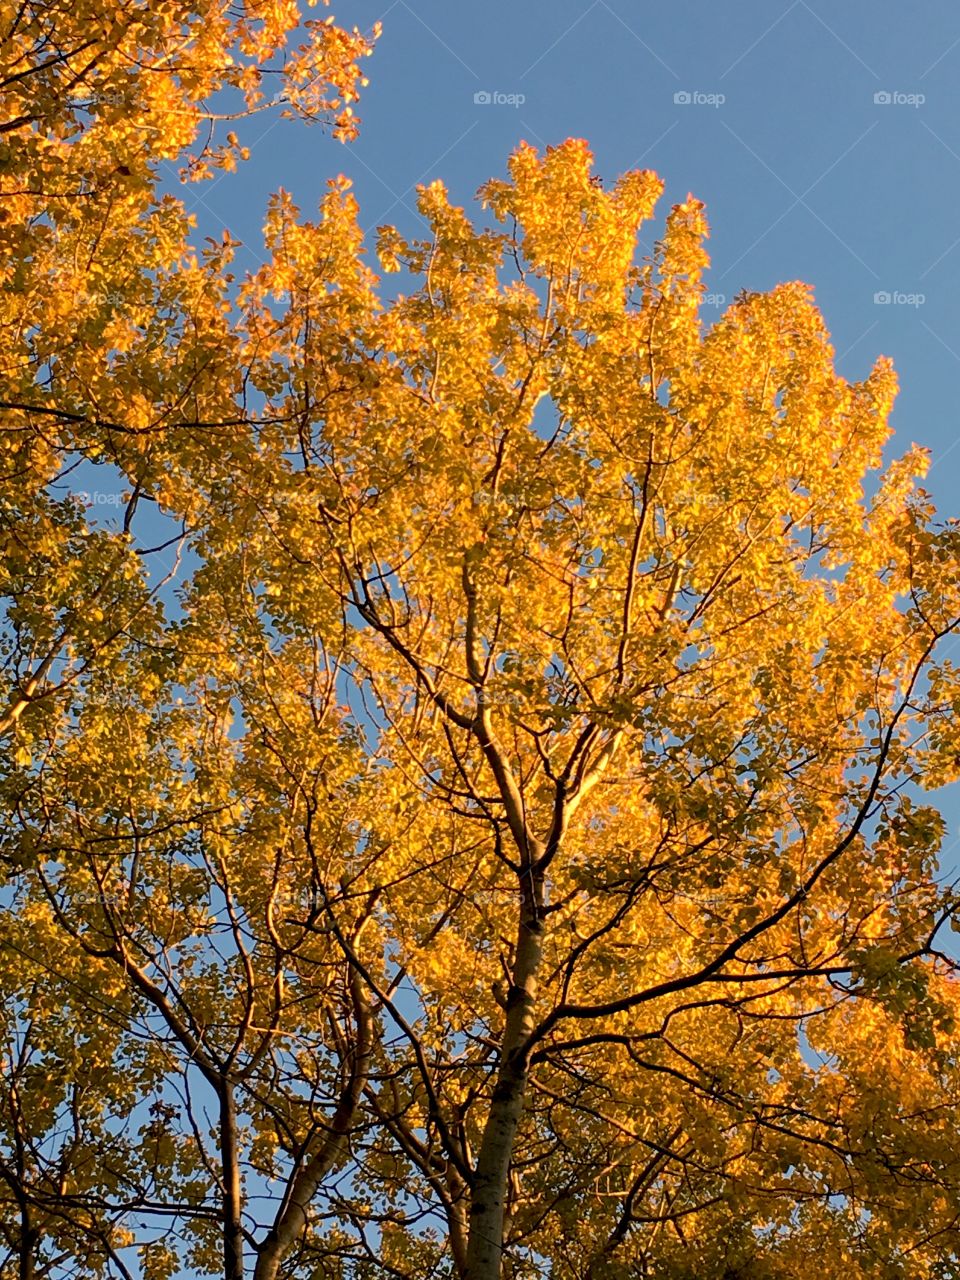 Golden tree at sunset